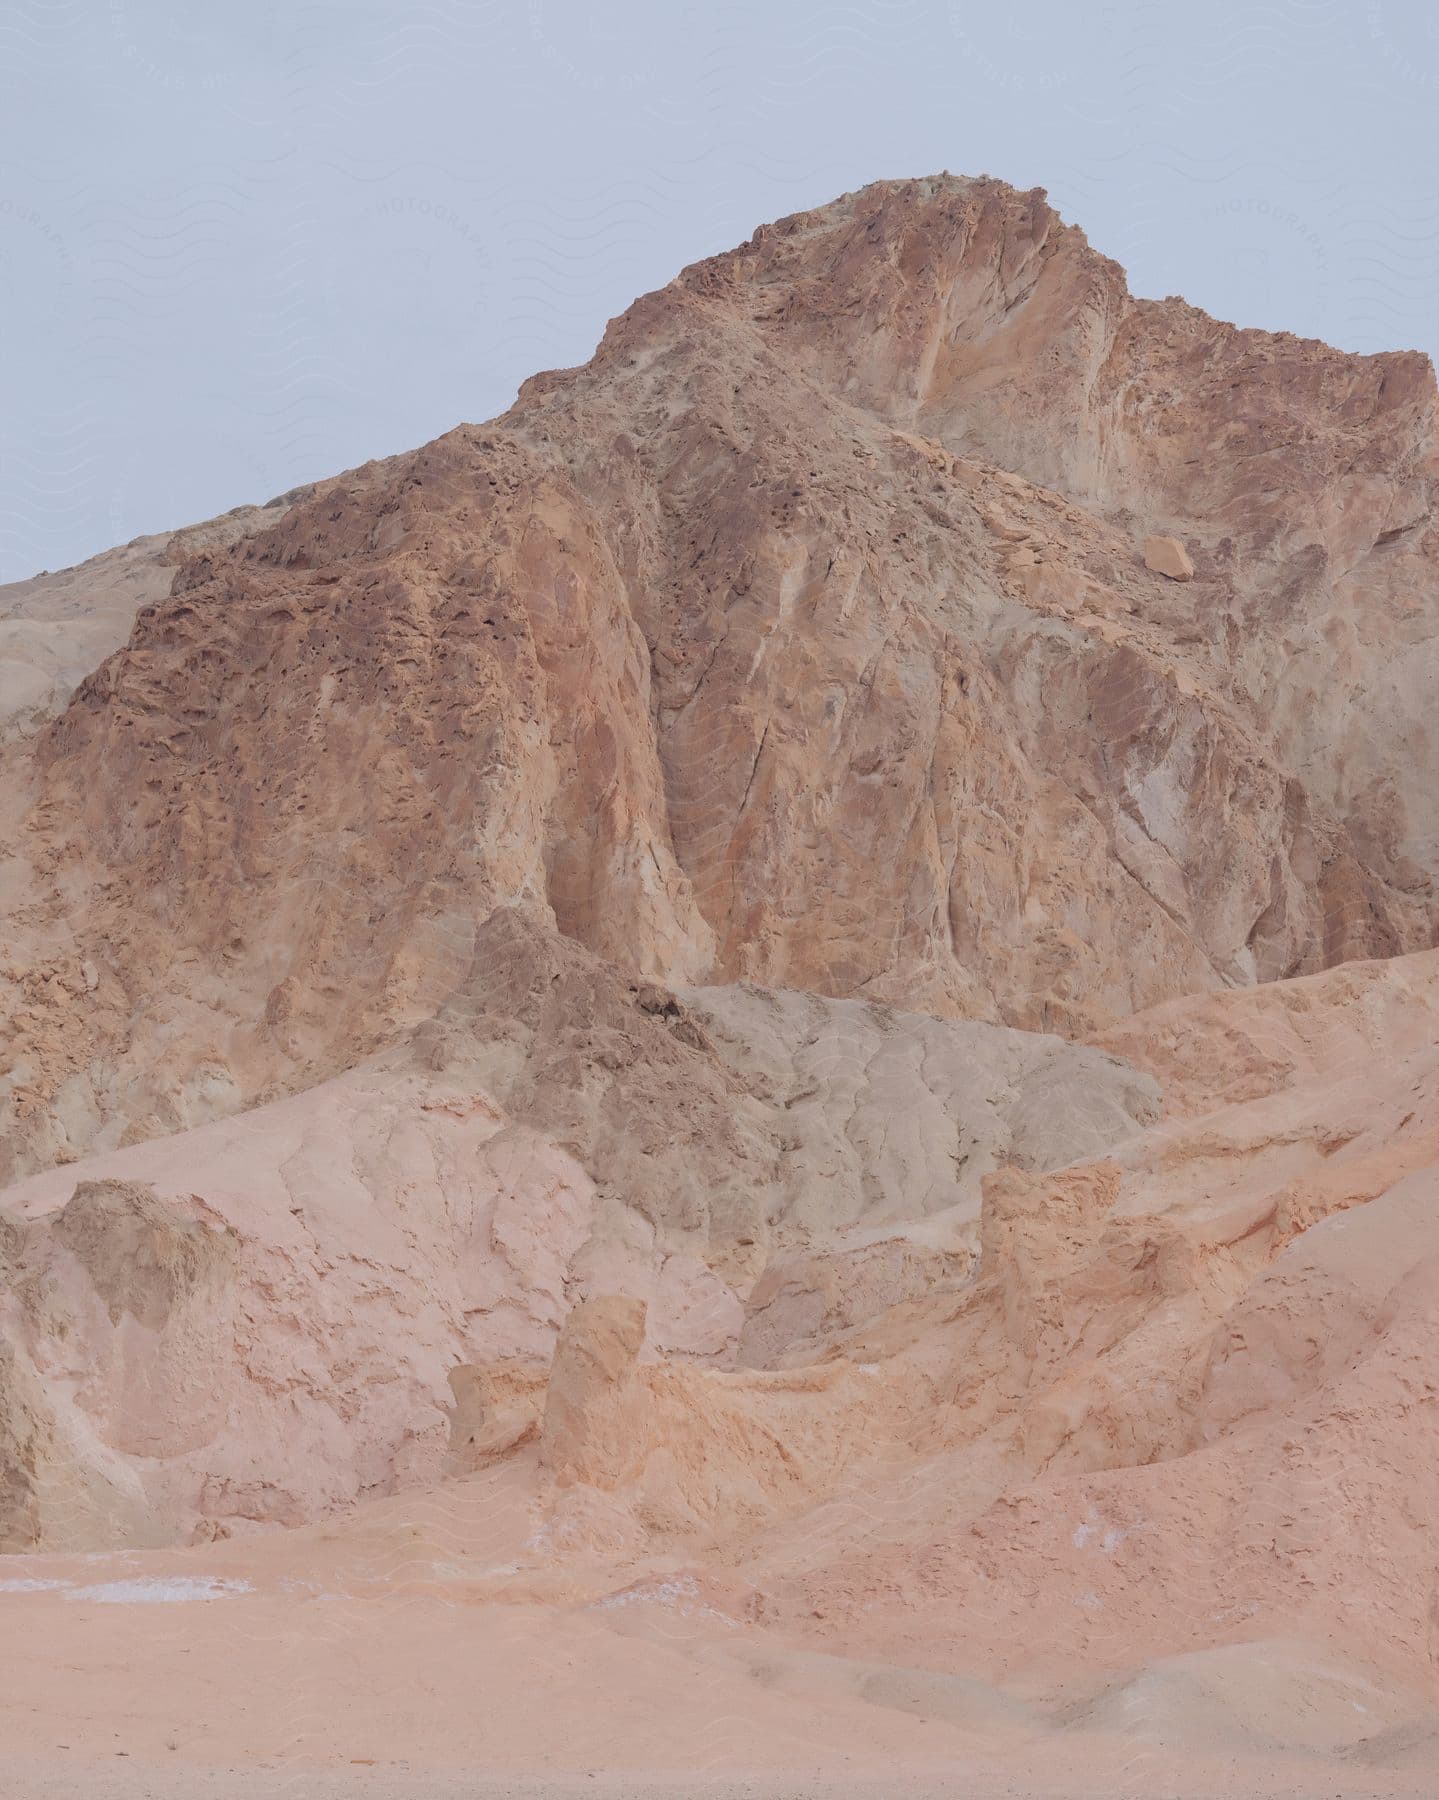 A light brown rocky mountain peak in the desert.